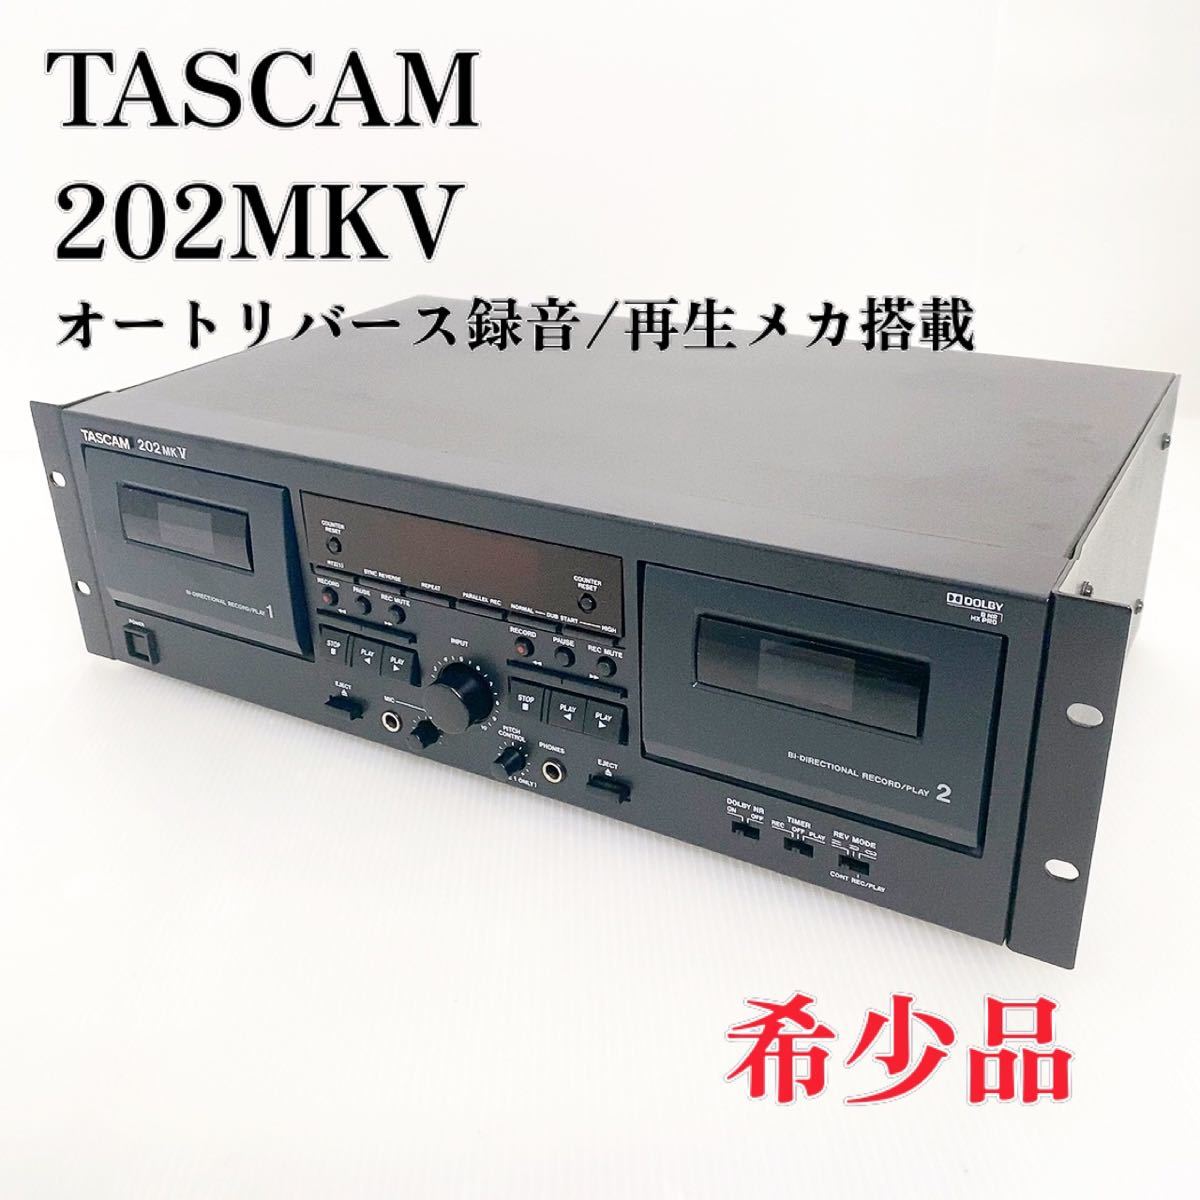 TASCAM 202mk IV タスカム カセット-